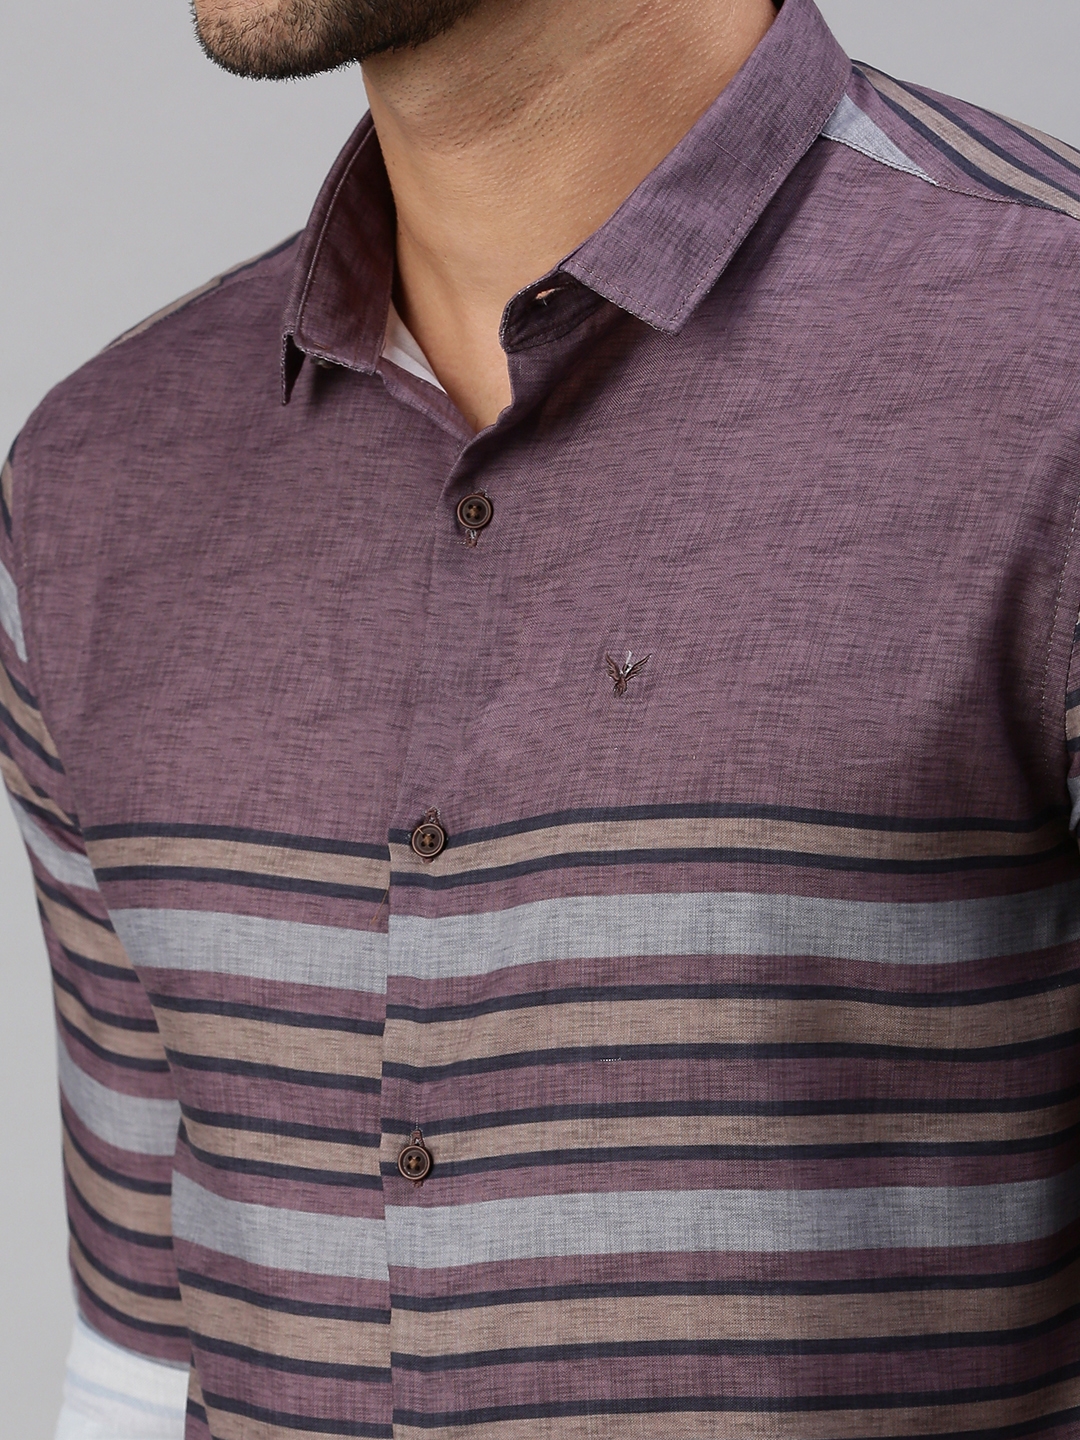 Men's Purple Cotton Striped Casual Shirts